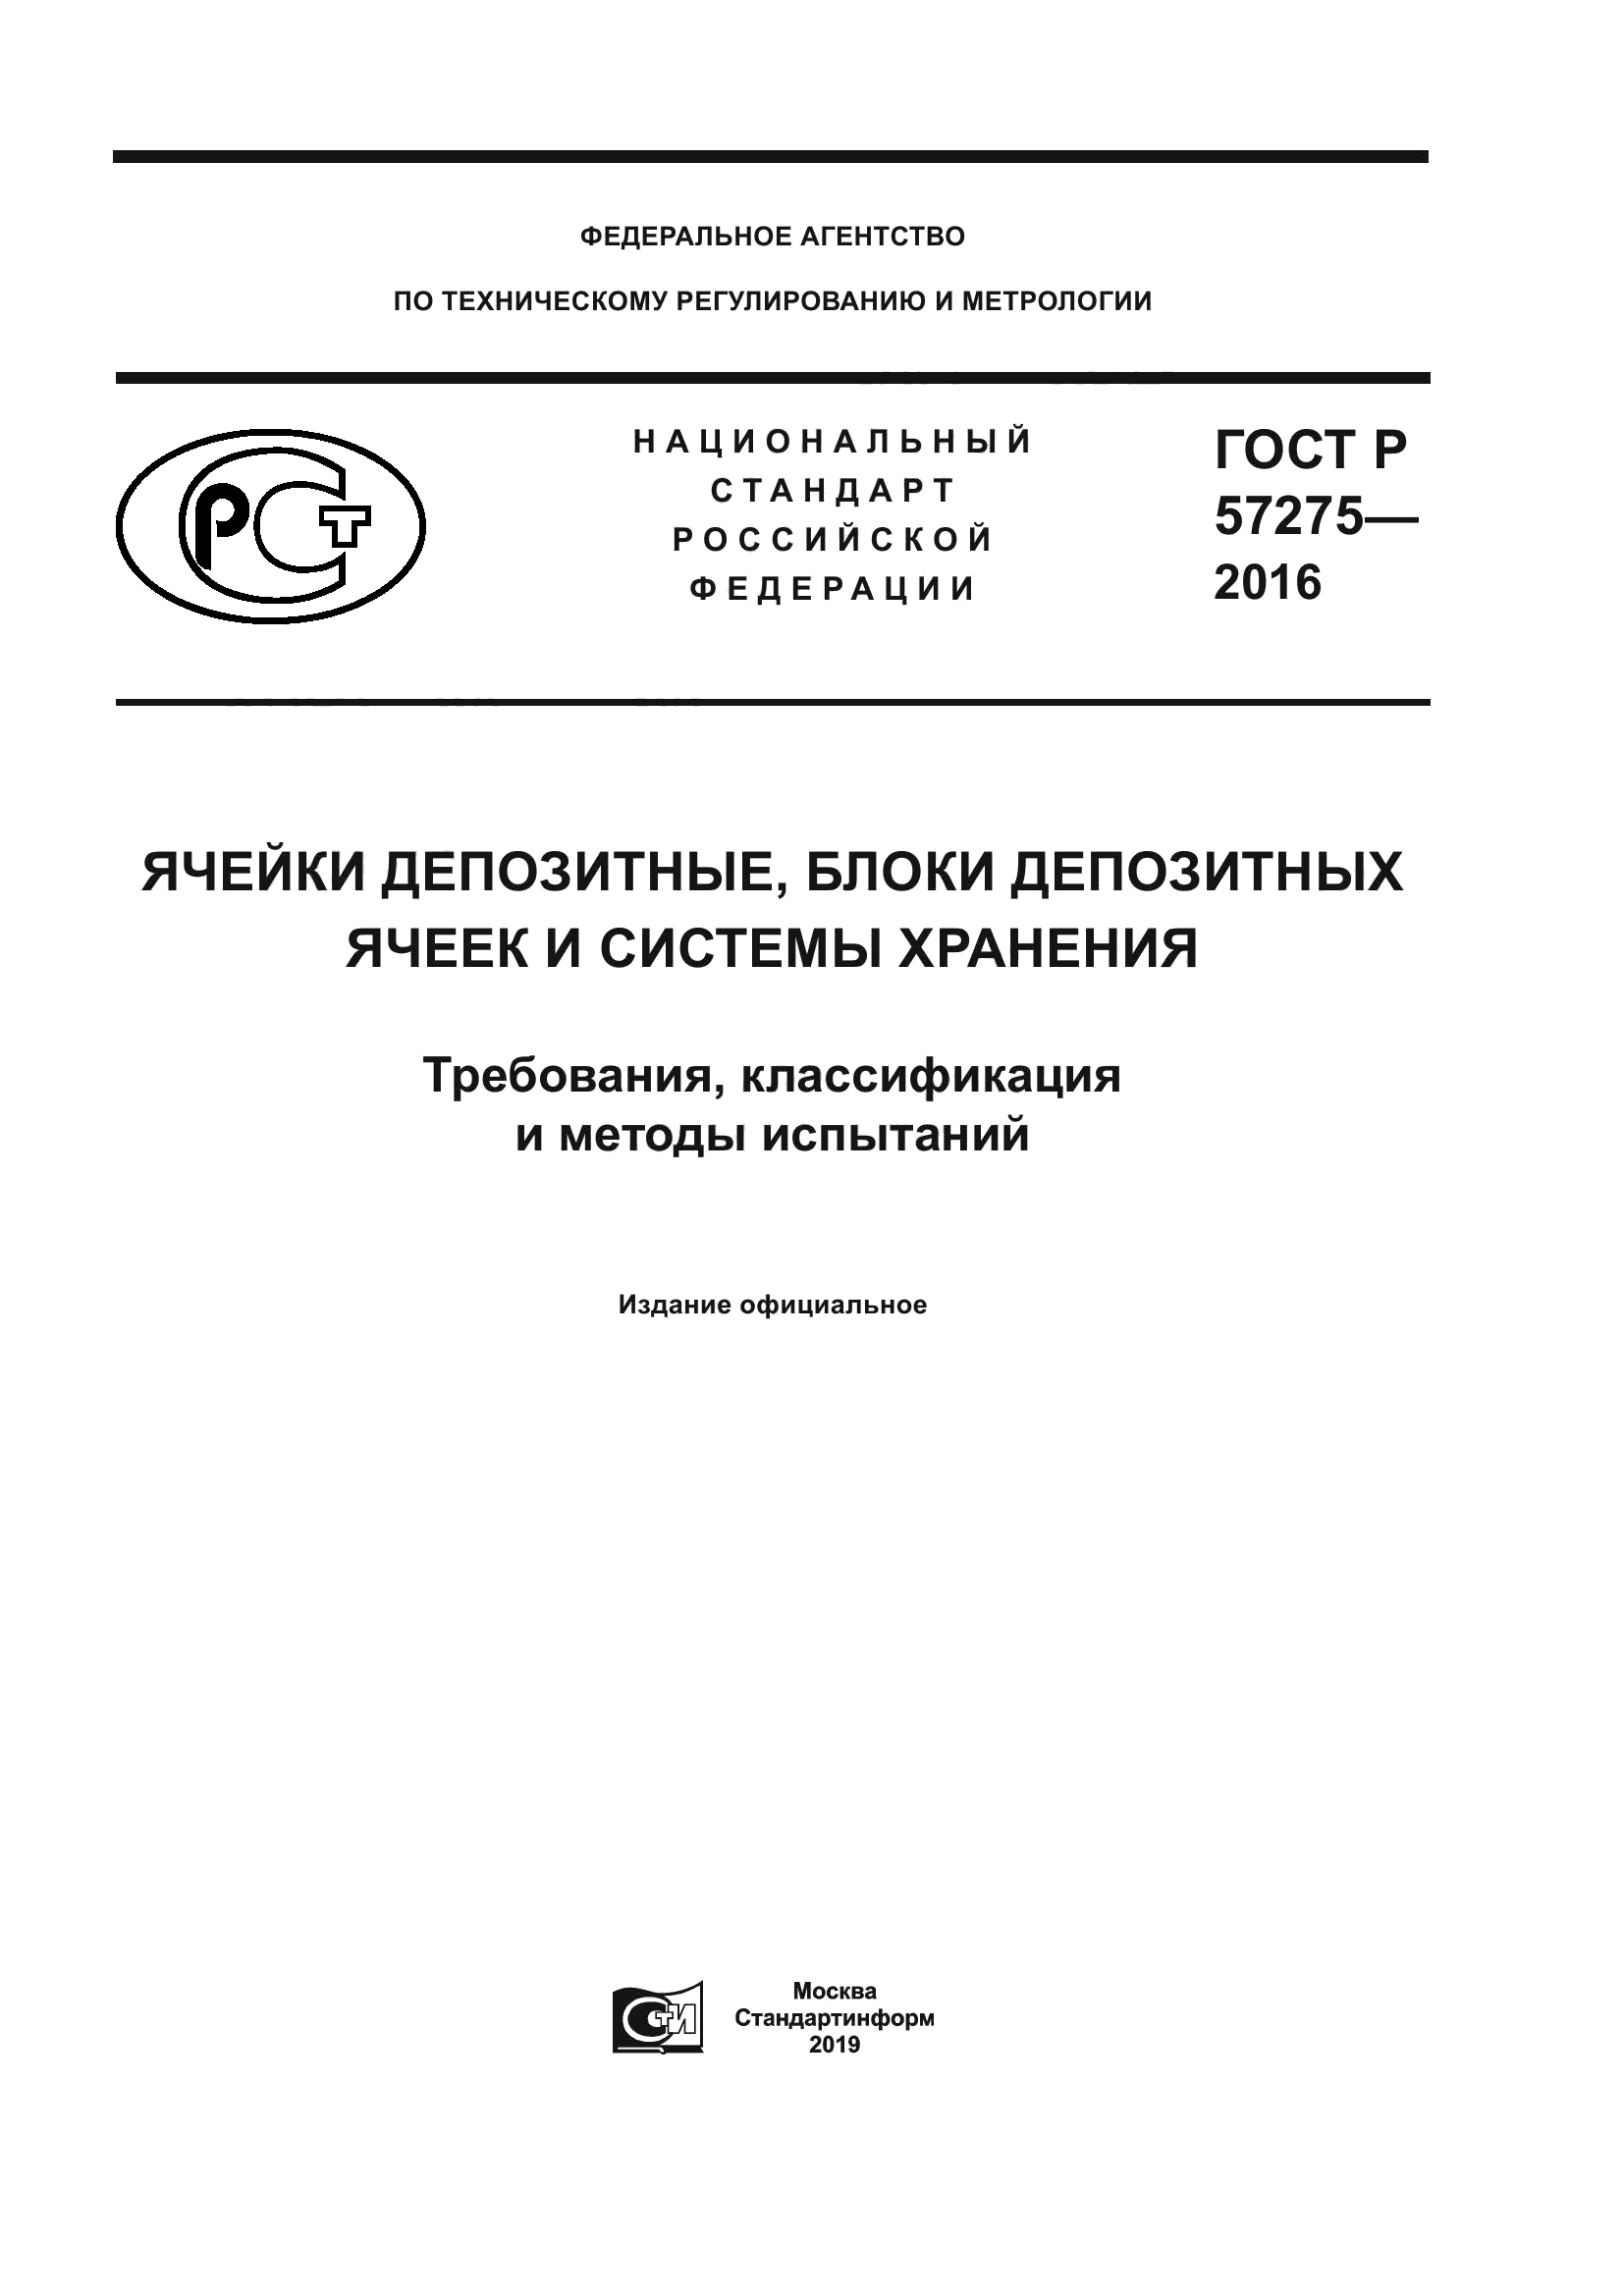 ГОСТ Р 57275-2016